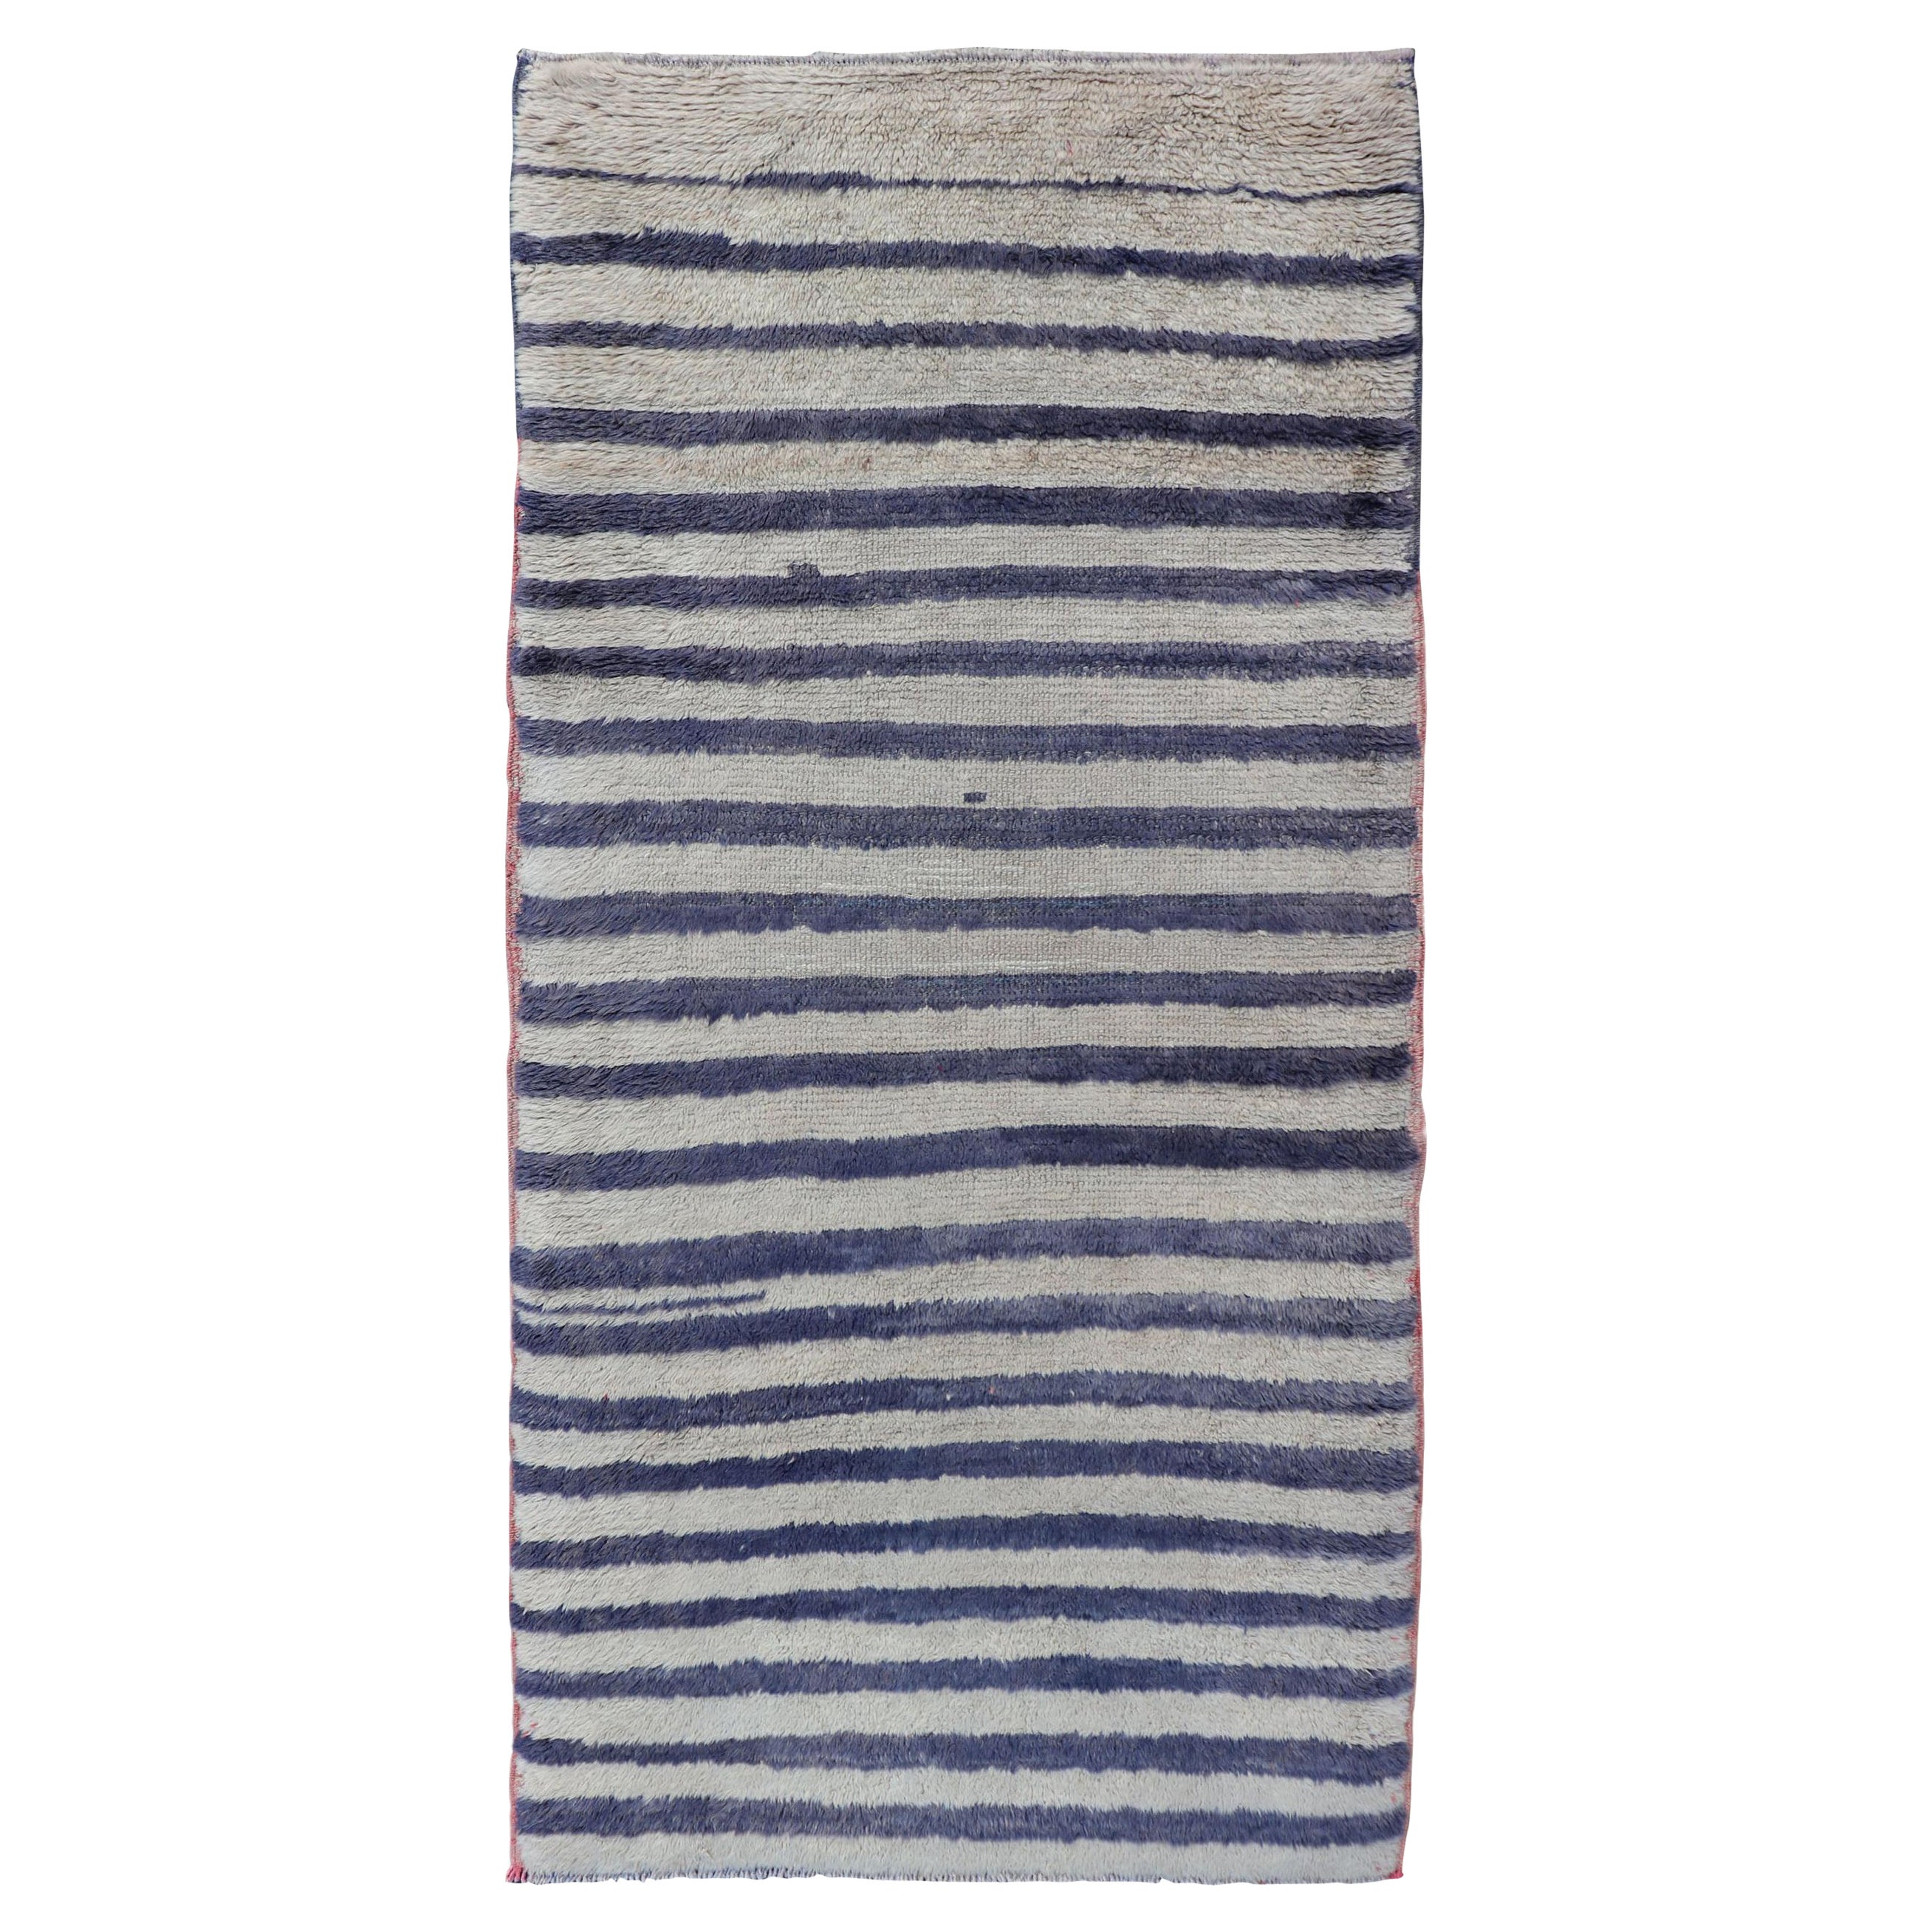 Turkish Angora Vintage Tulu Carpet with Stripe Pattern Light Taupe & Navy Blue For Sale